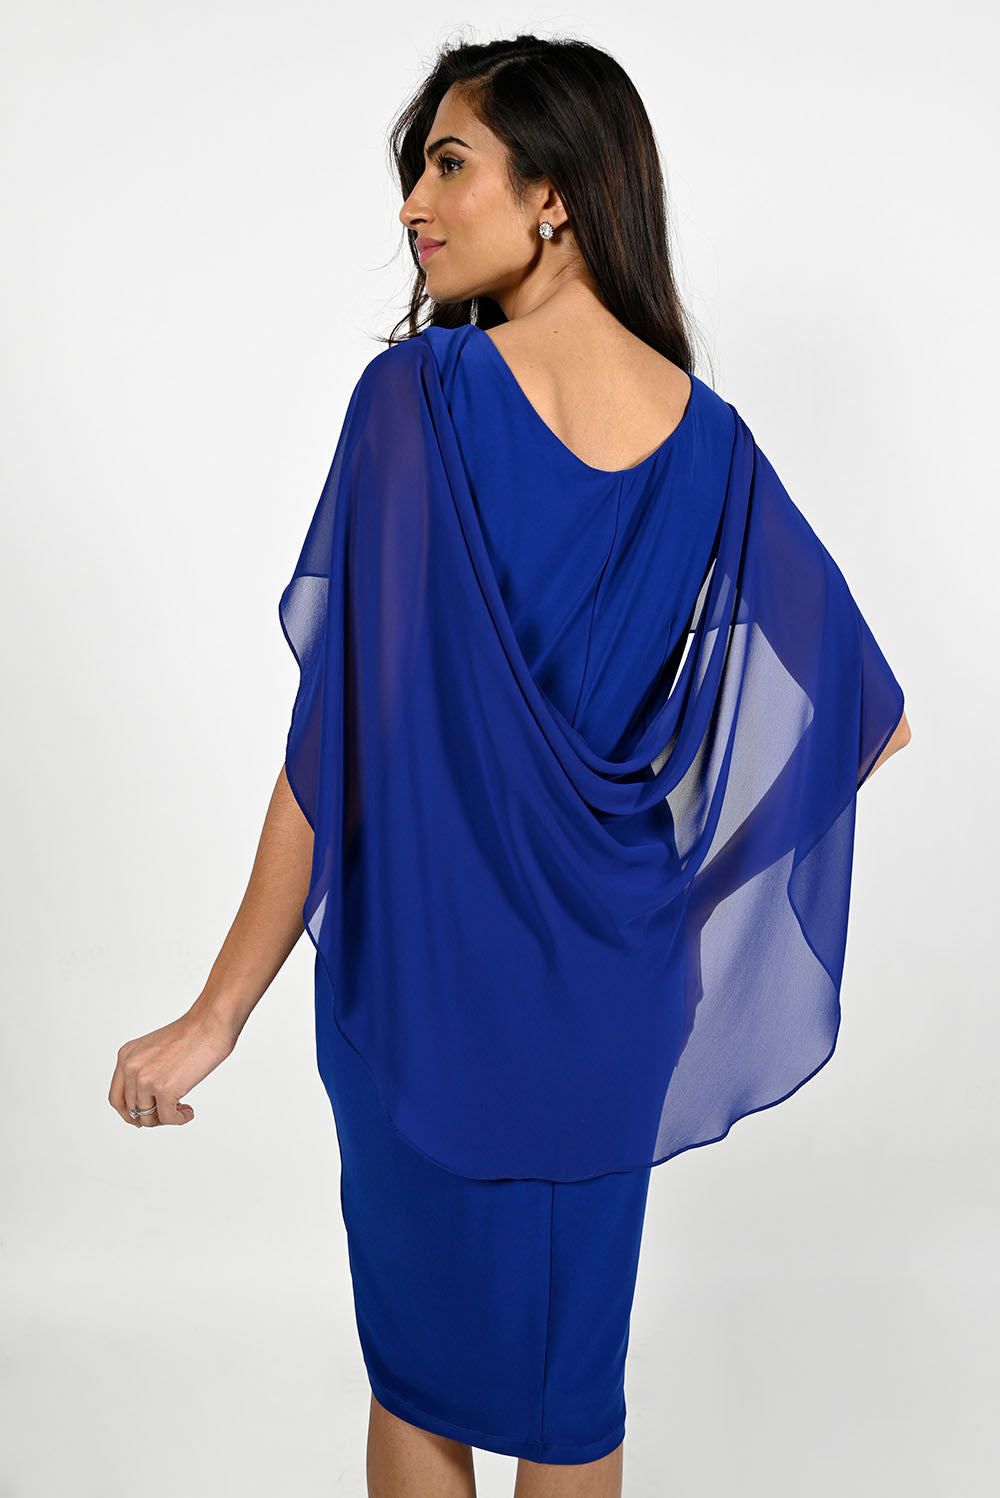 Frank Lyman Imperial Blue Woven Dress Style 209288 – Luxetire